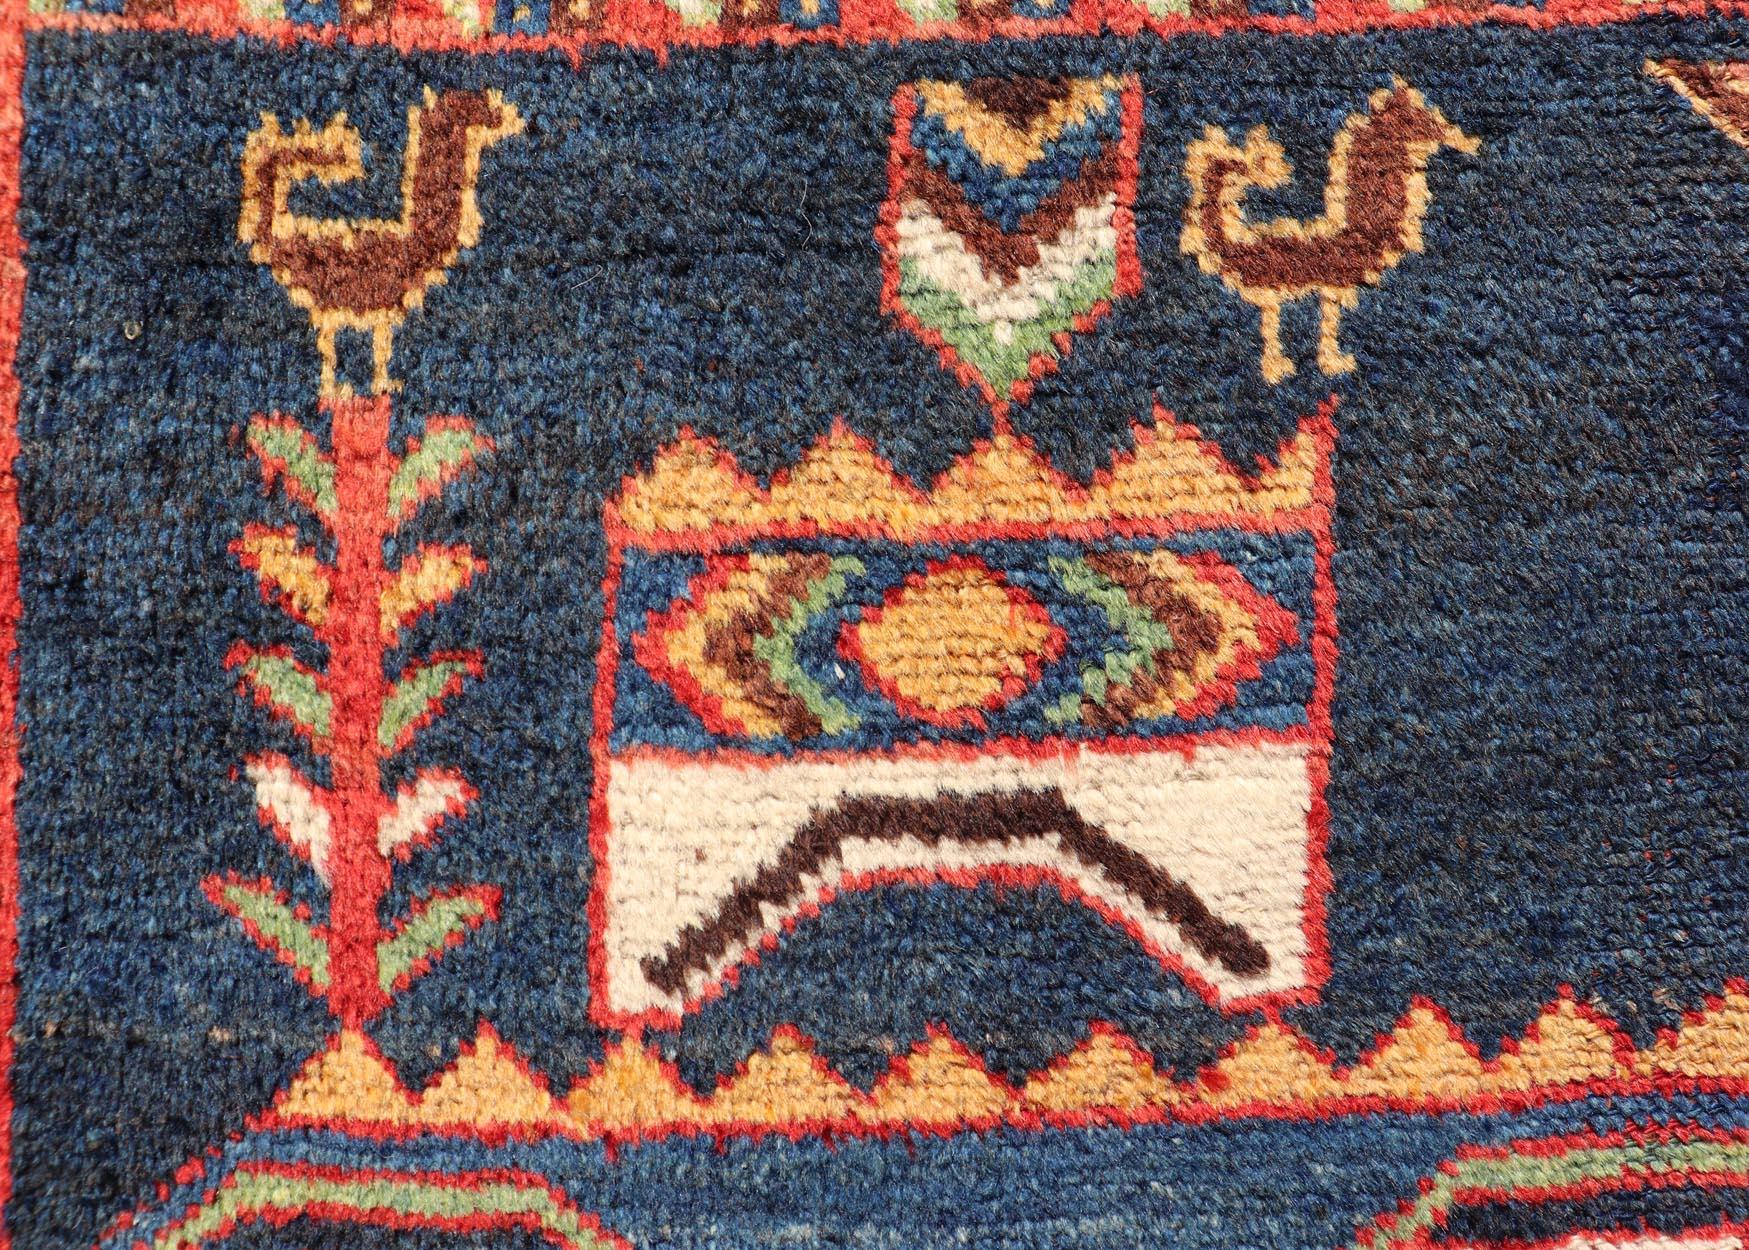 Lori antique Persian in multi-colors with large scale all-over geometric tribal design, 
Keivan Woven Arts / rug EMB-9569-P13068, country of origin / type: Iran / lori, circa 1900

Measures: 4'9 x 8'6.